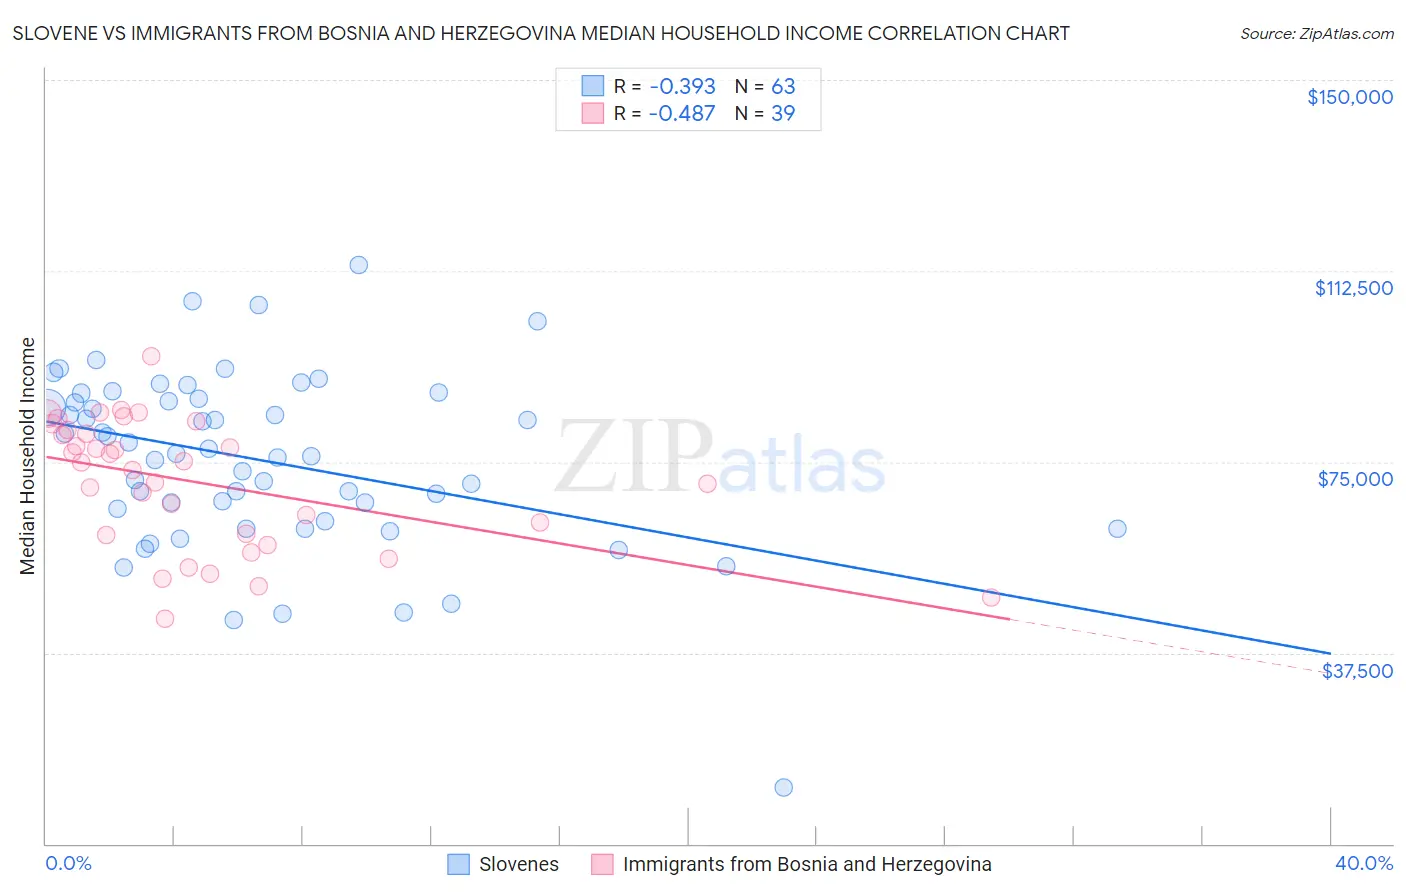 Slovene vs Immigrants from Bosnia and Herzegovina Median Household Income